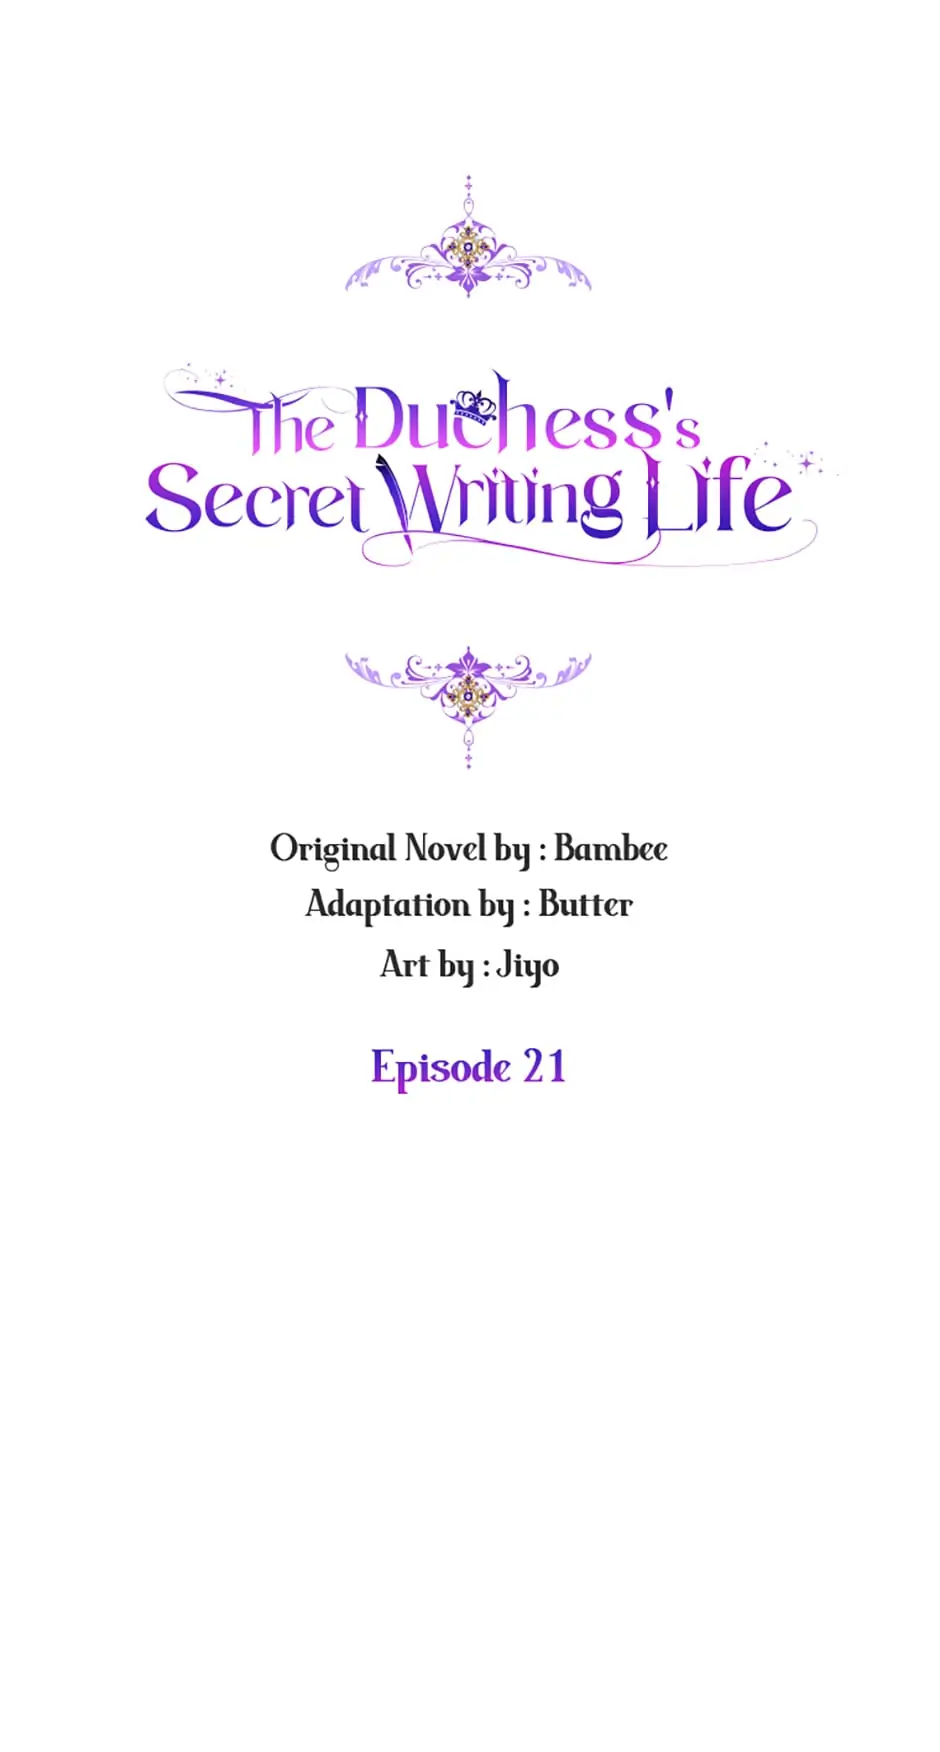 The Duchess’ Secret Writings chapter 21